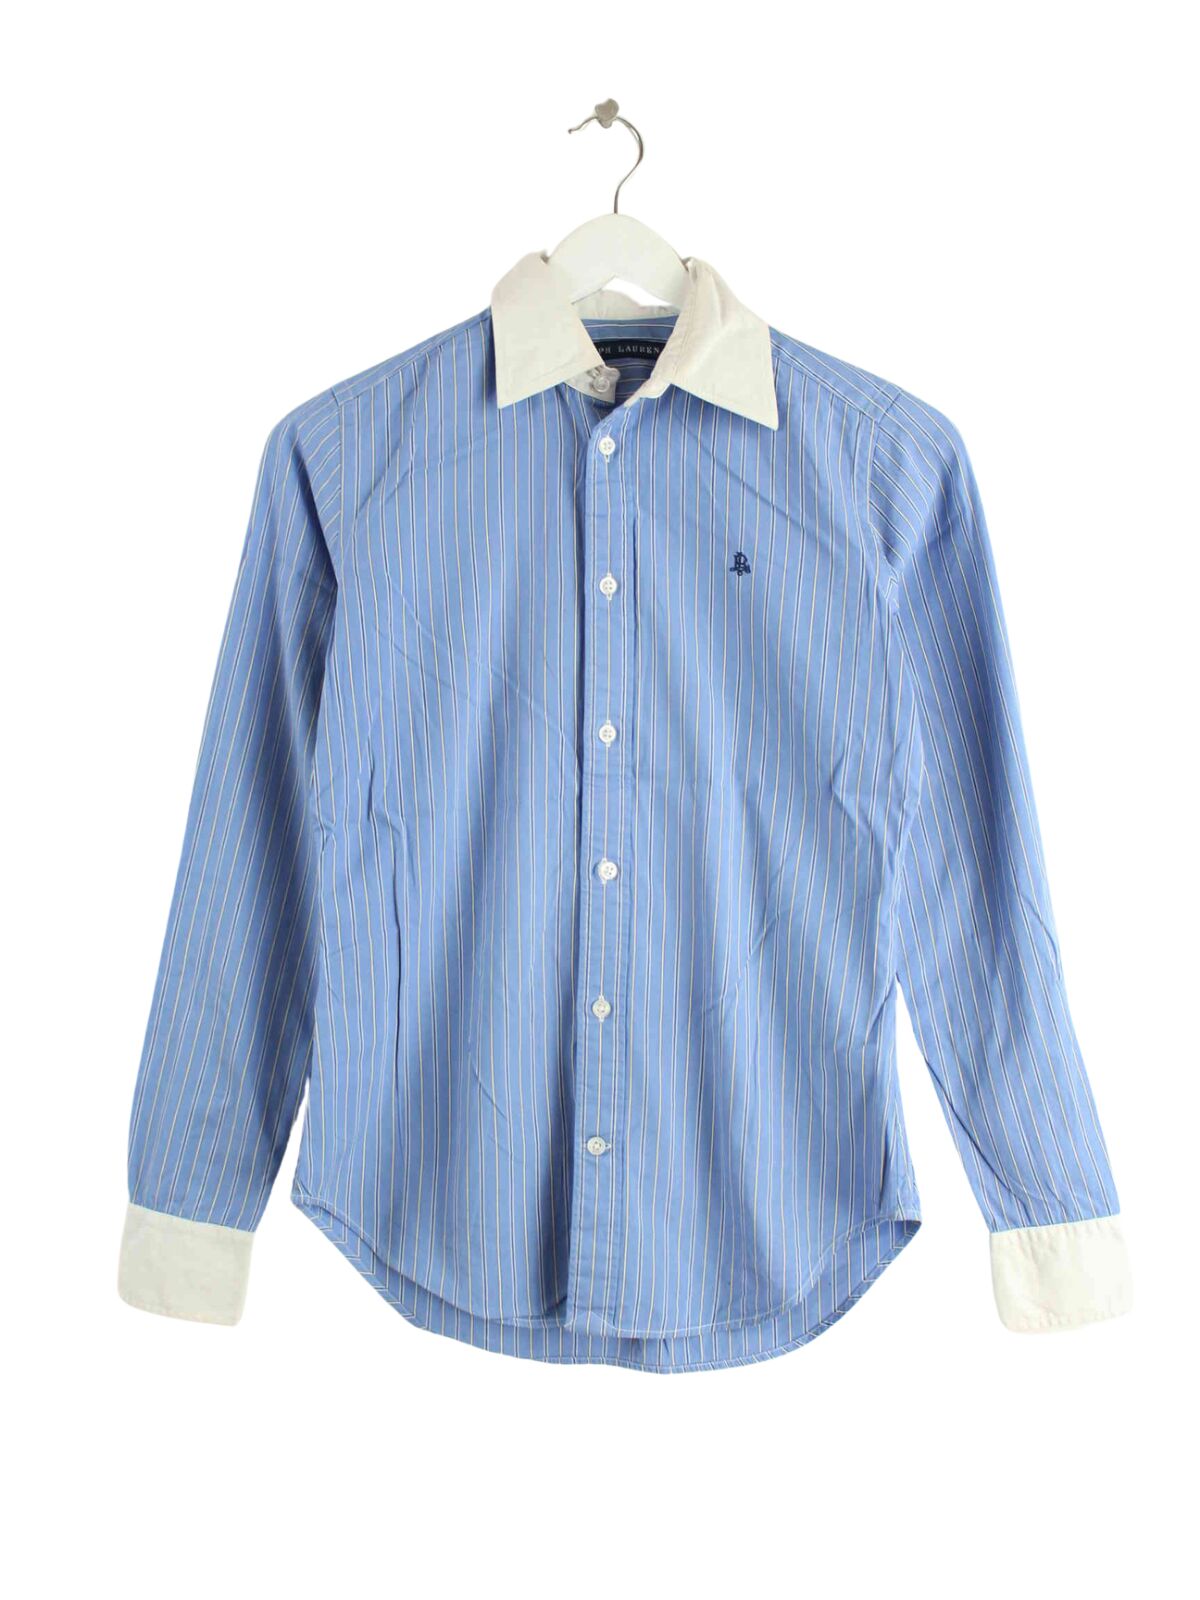 Ralph Lauren Damen Striped Hemd Blau S (front image)